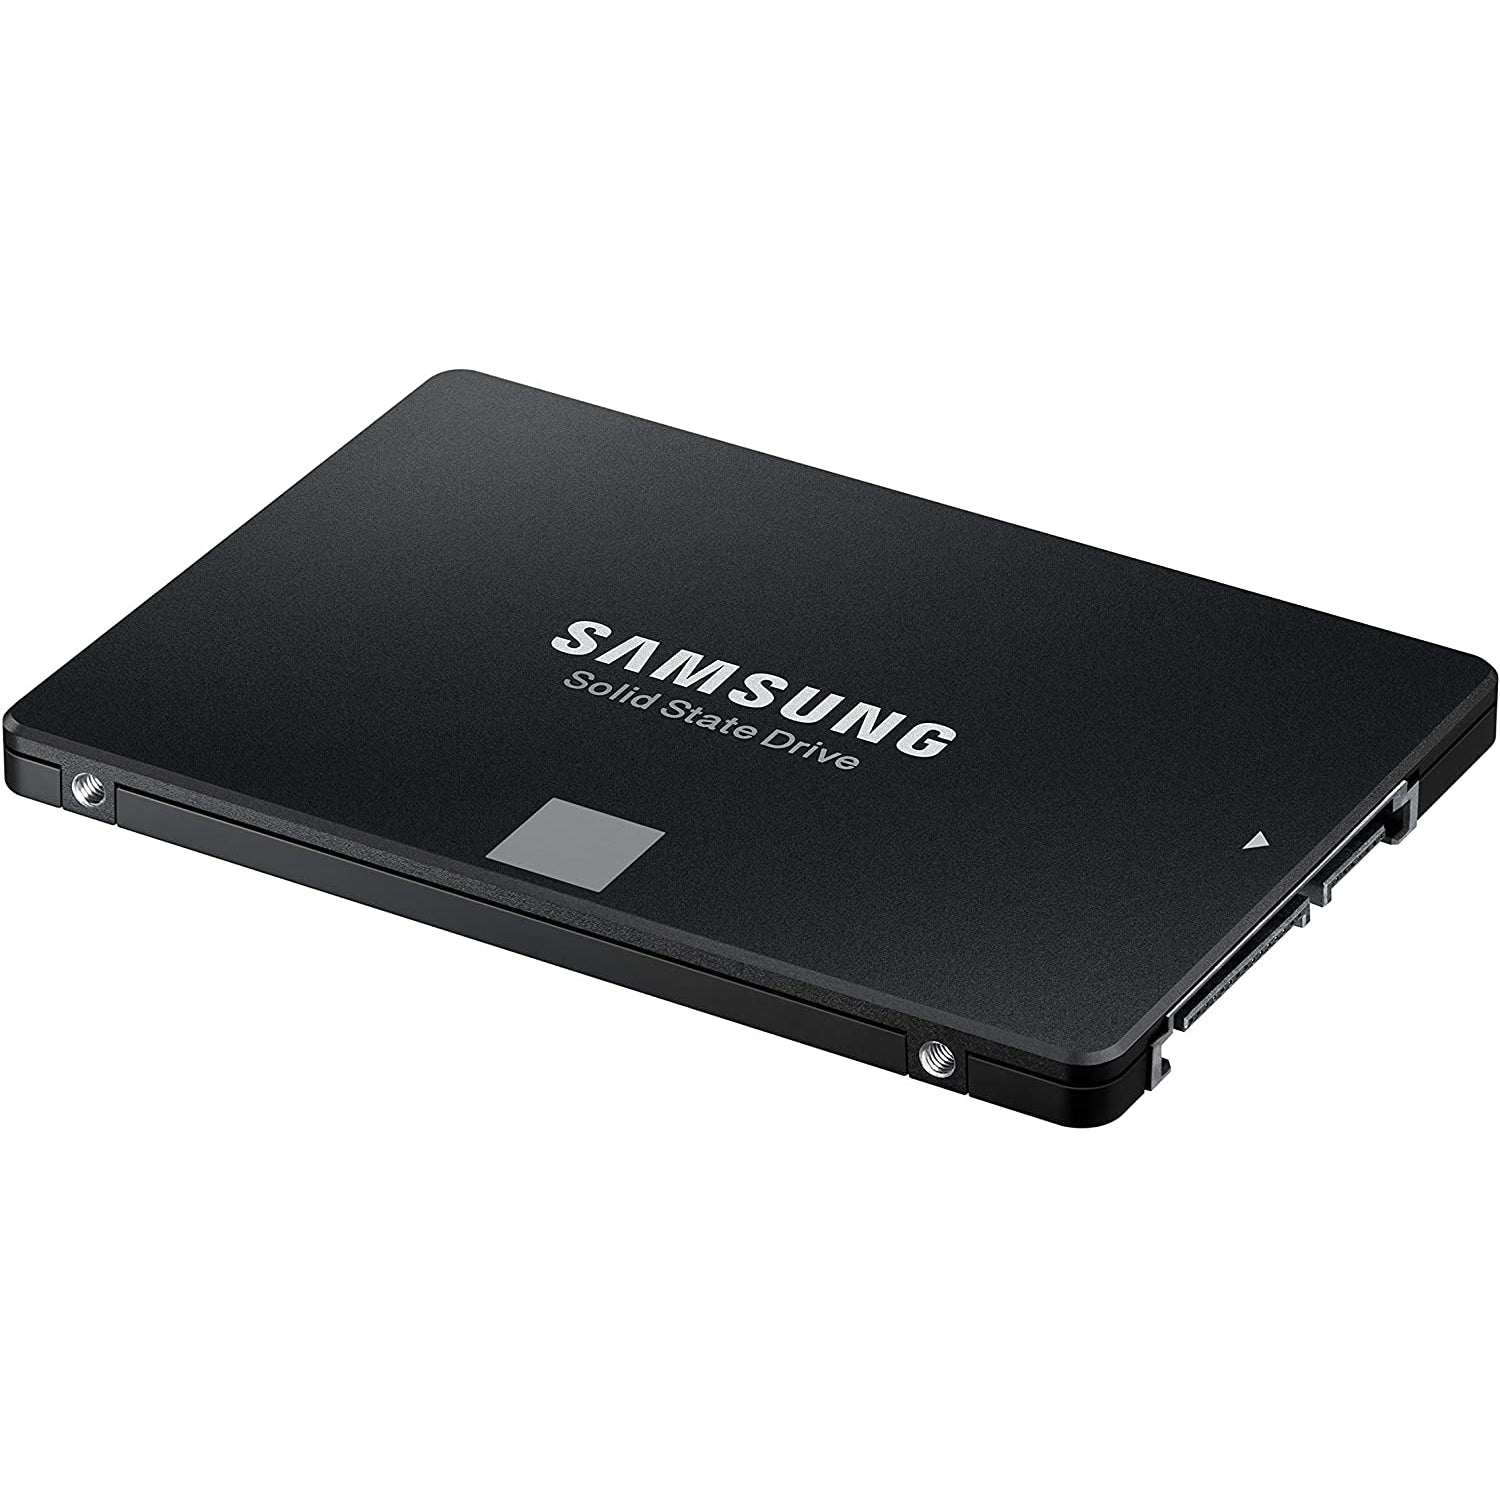 Samsung 860 EVO 500 GB SATA 2.5 Inch Internal Solid State Drive - Black